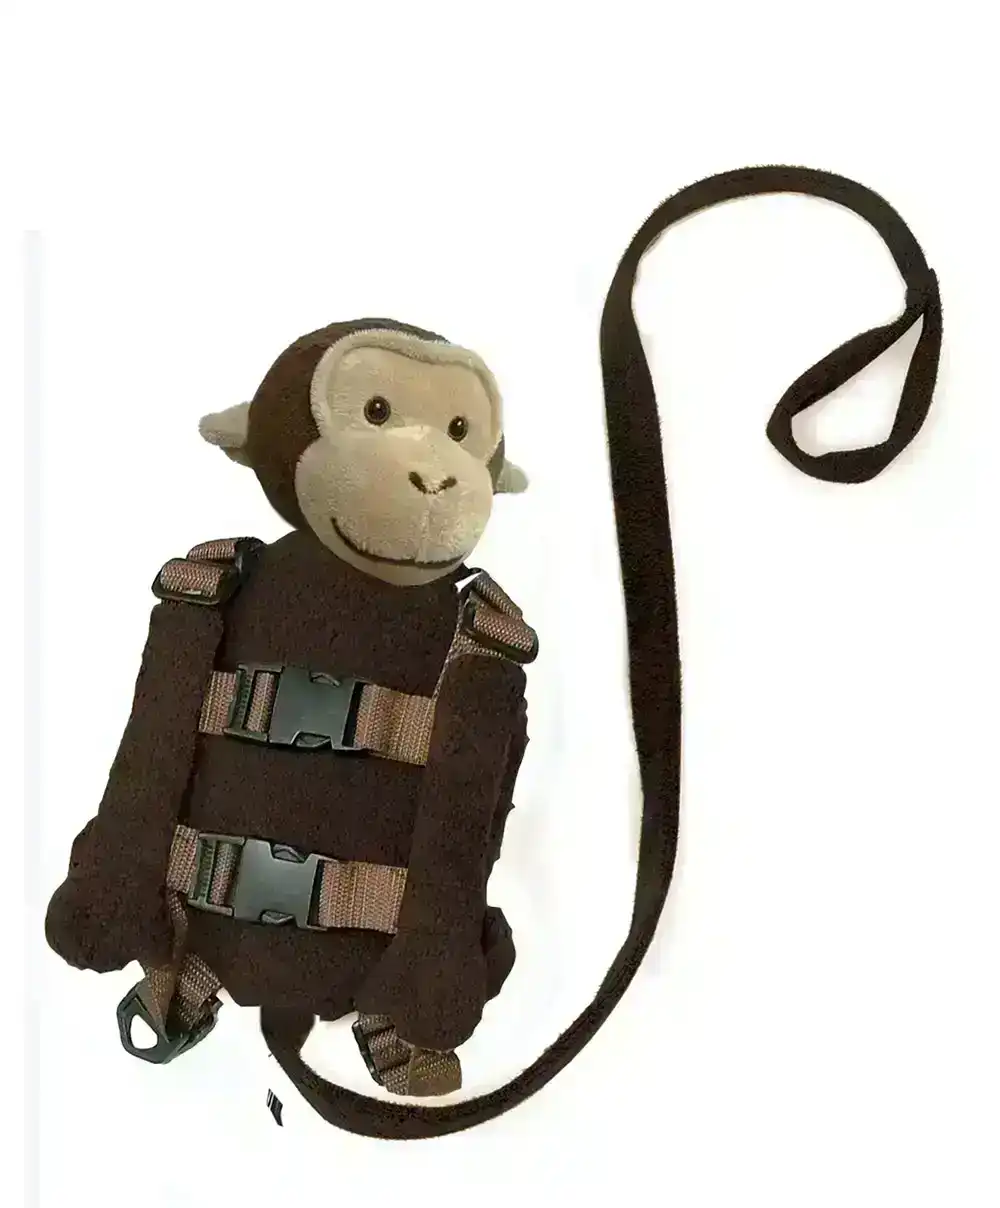 Playette 2-in-1 Travel Harness Buddy/Adjustable Strap Baby/Kids 18m-4y Monkey